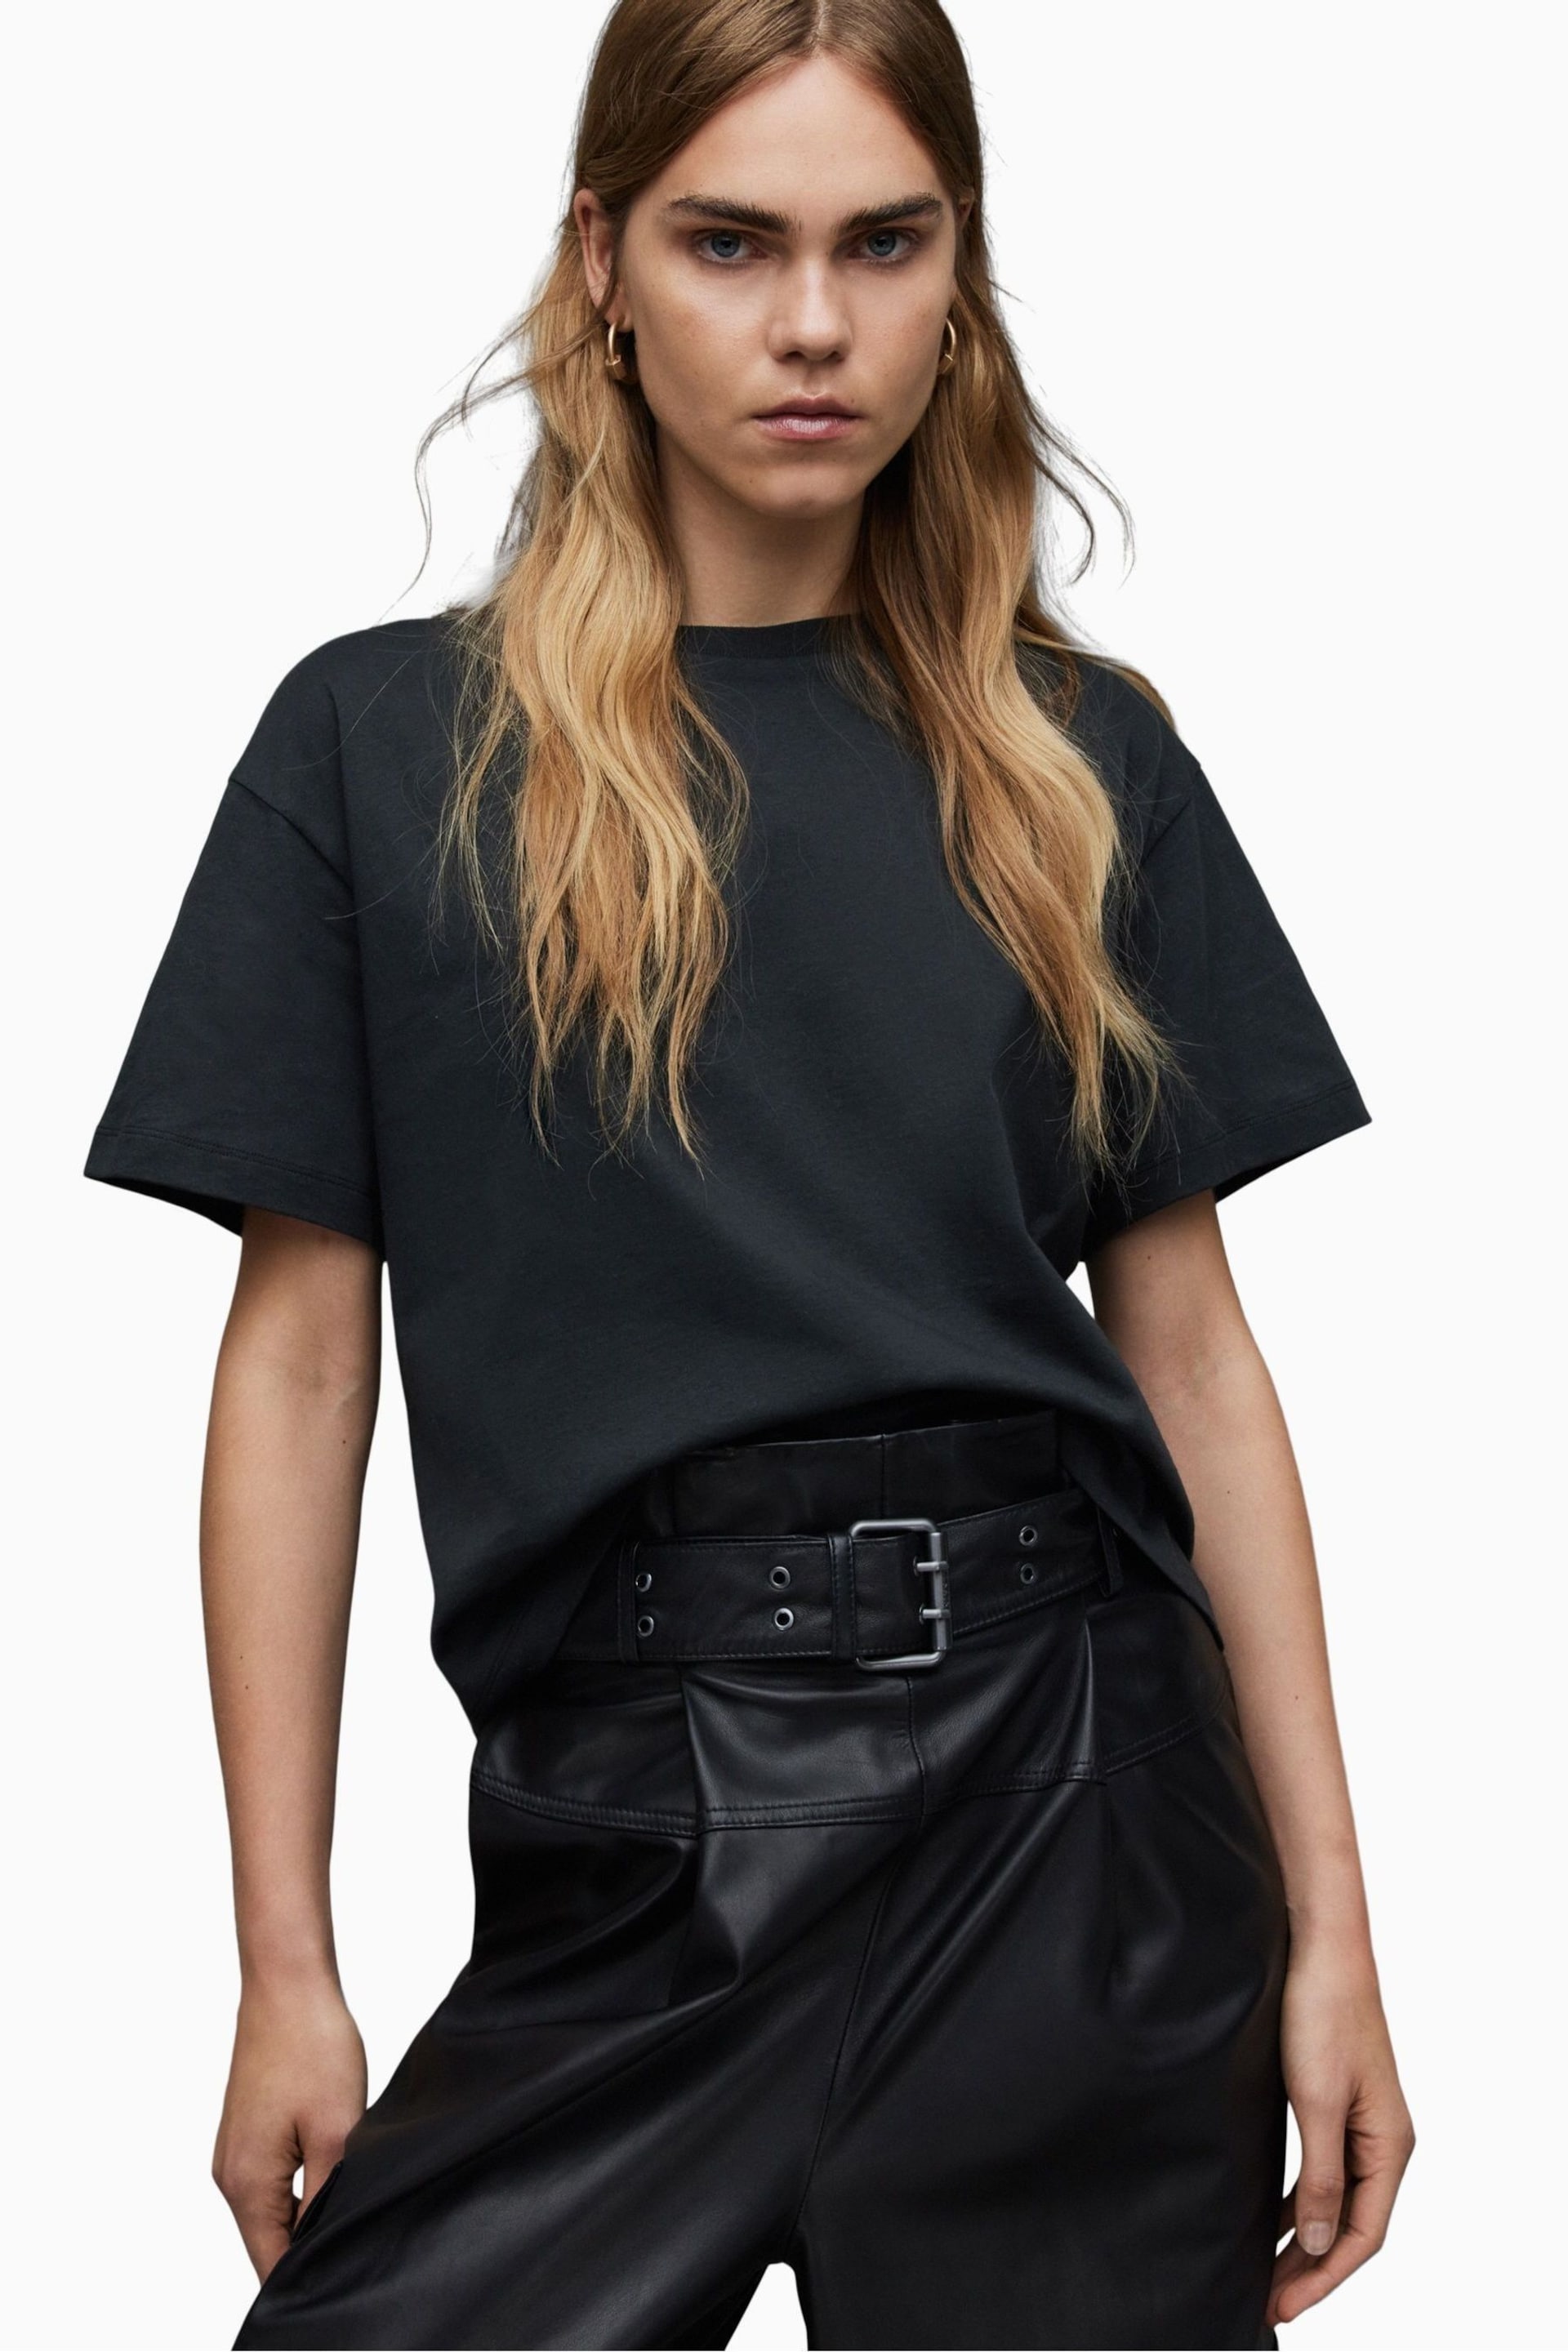 AllSaints Black Cygni T-Shirt - Image 1 of 6